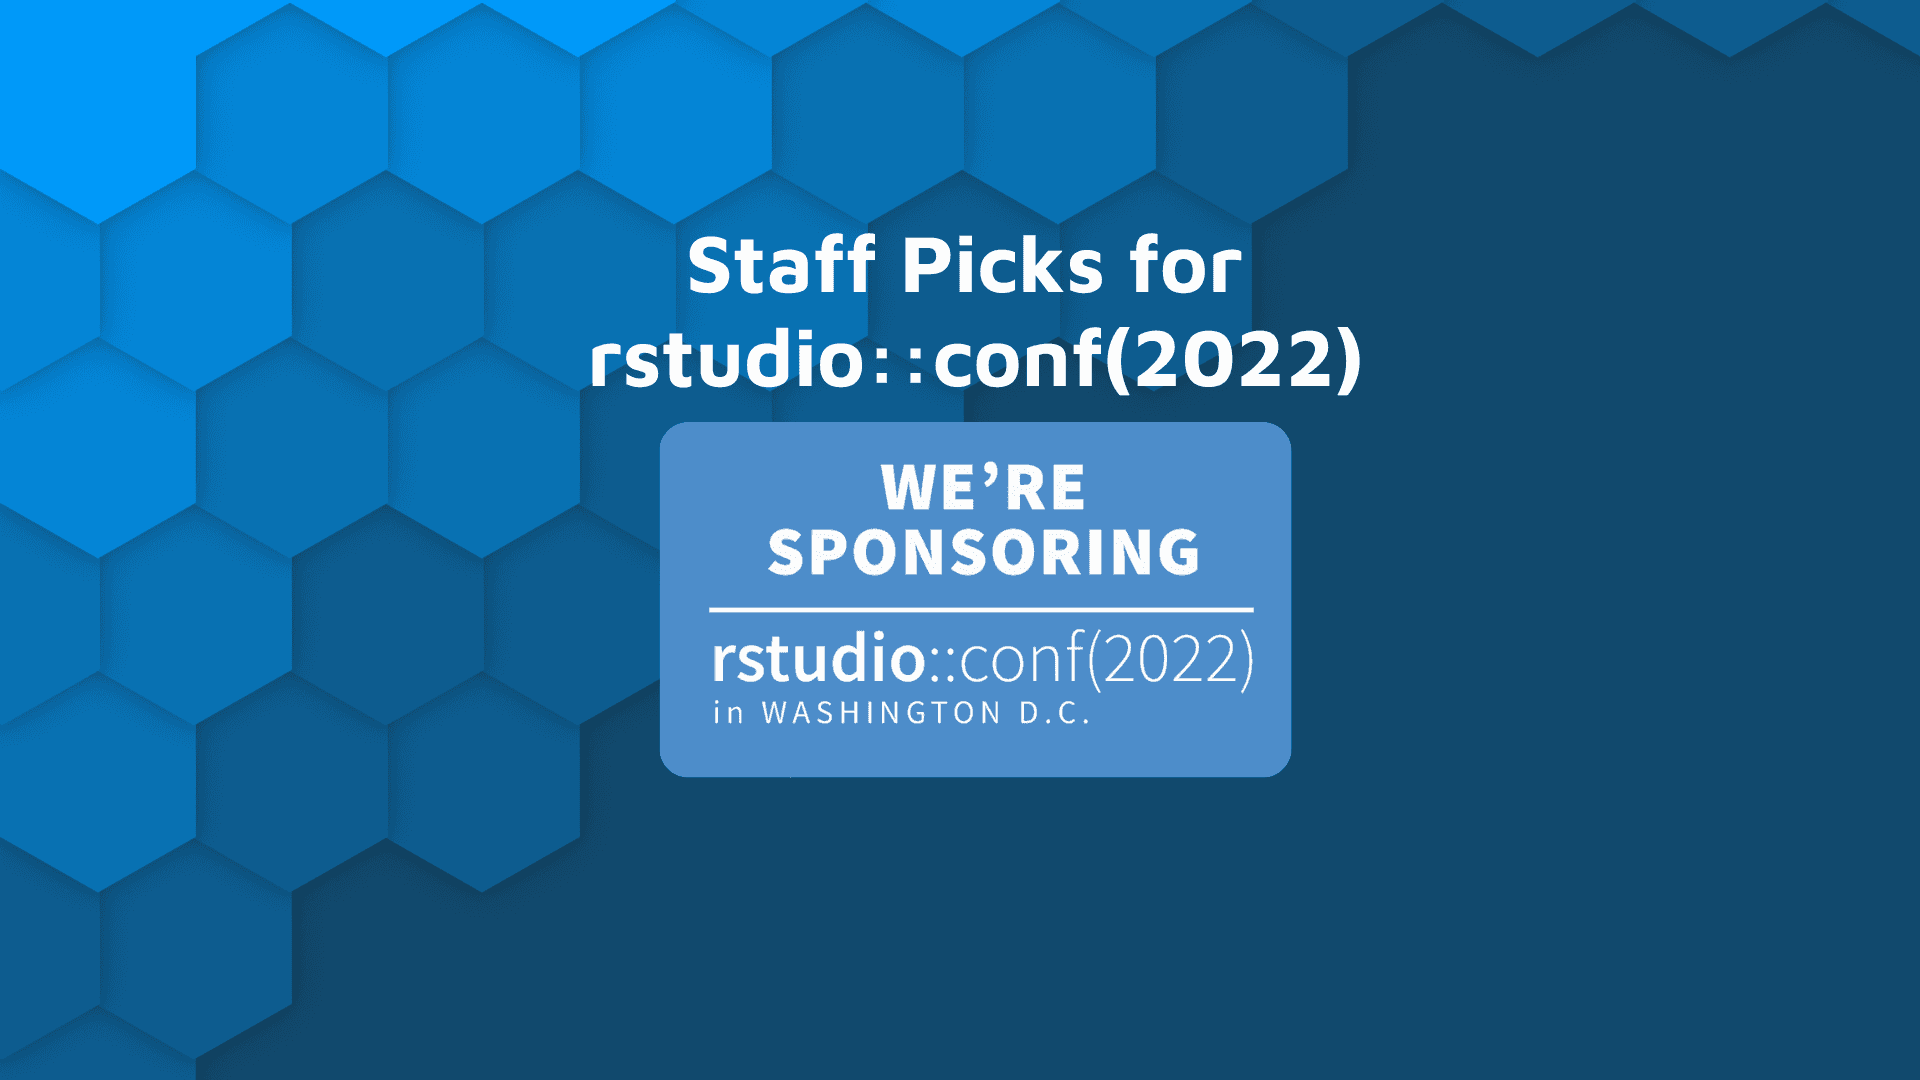 appsilon staff picks for rstudio::conf(2022) presentations